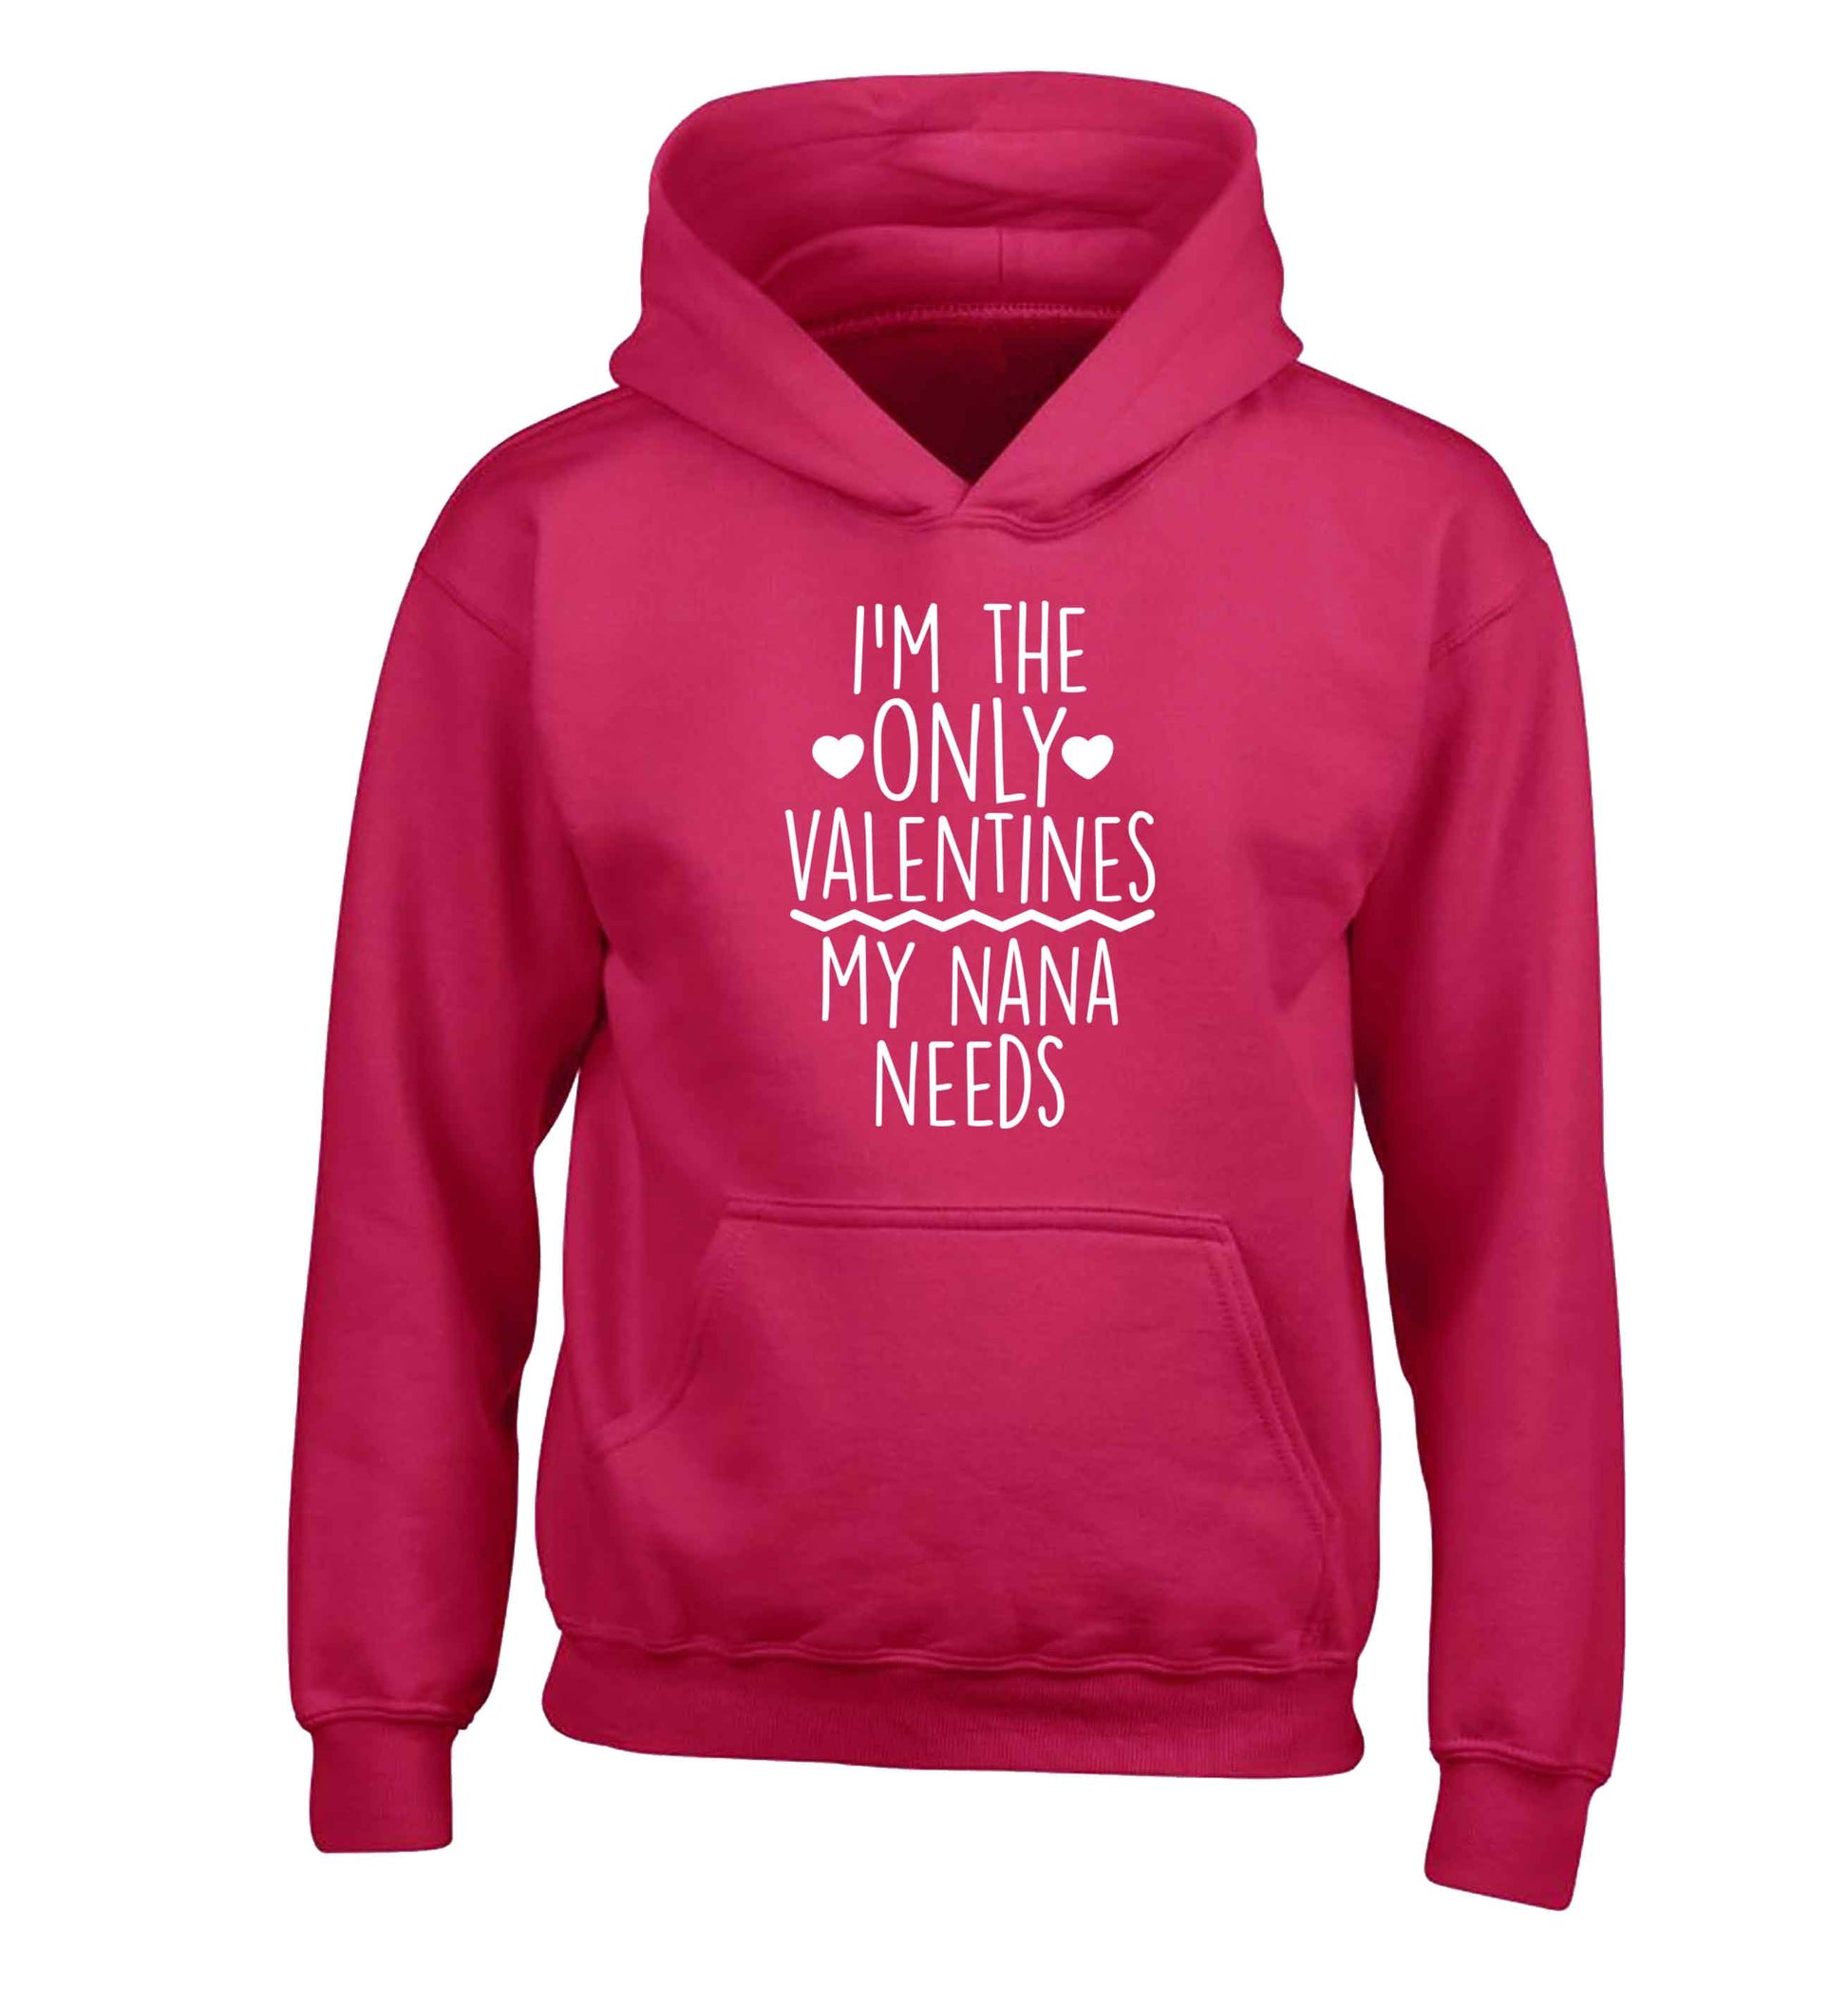 I'm the only valentines my nana needs children's pink hoodie 12-13 Years